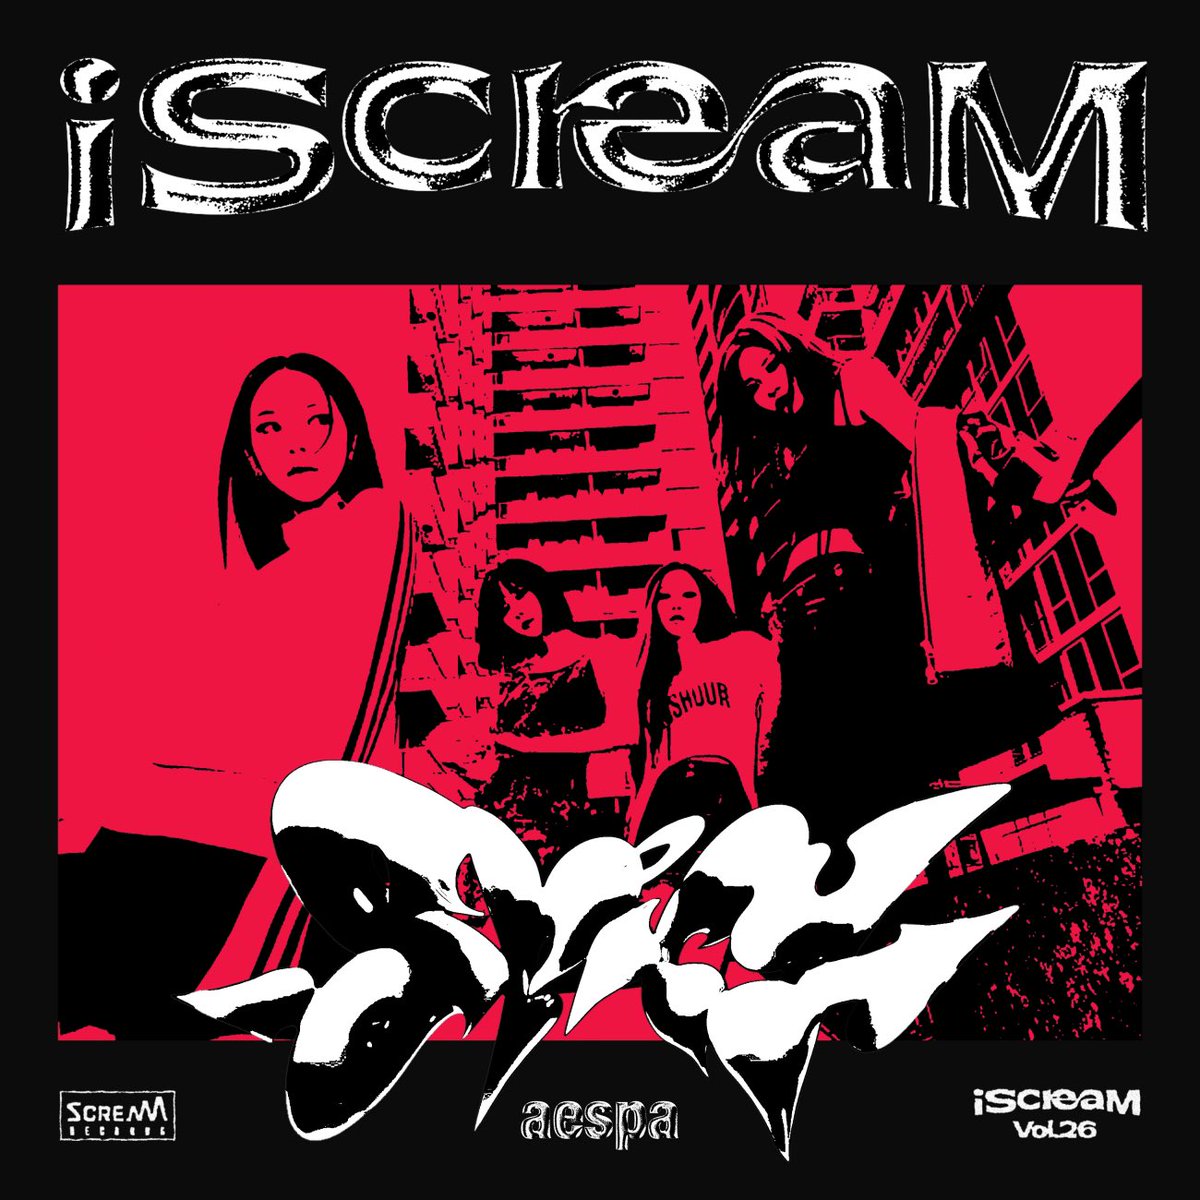 ‘iScreaM’ 프로젝트, 에스파 ‘Spicy’ 리믹스 싱글 오늘 오후 1시 공개!
미국 신예 프로듀서 겸 DJ Nitepunk 참여! 에스파 세계관 스토리 담은 미래지향적 분위기!

bit.ly/46cxvEJ

#에스파 #aespa
#Spicy #aespa_spicy
#Remix
#iScreaM
#ScreaMRecords
#SMTOWN